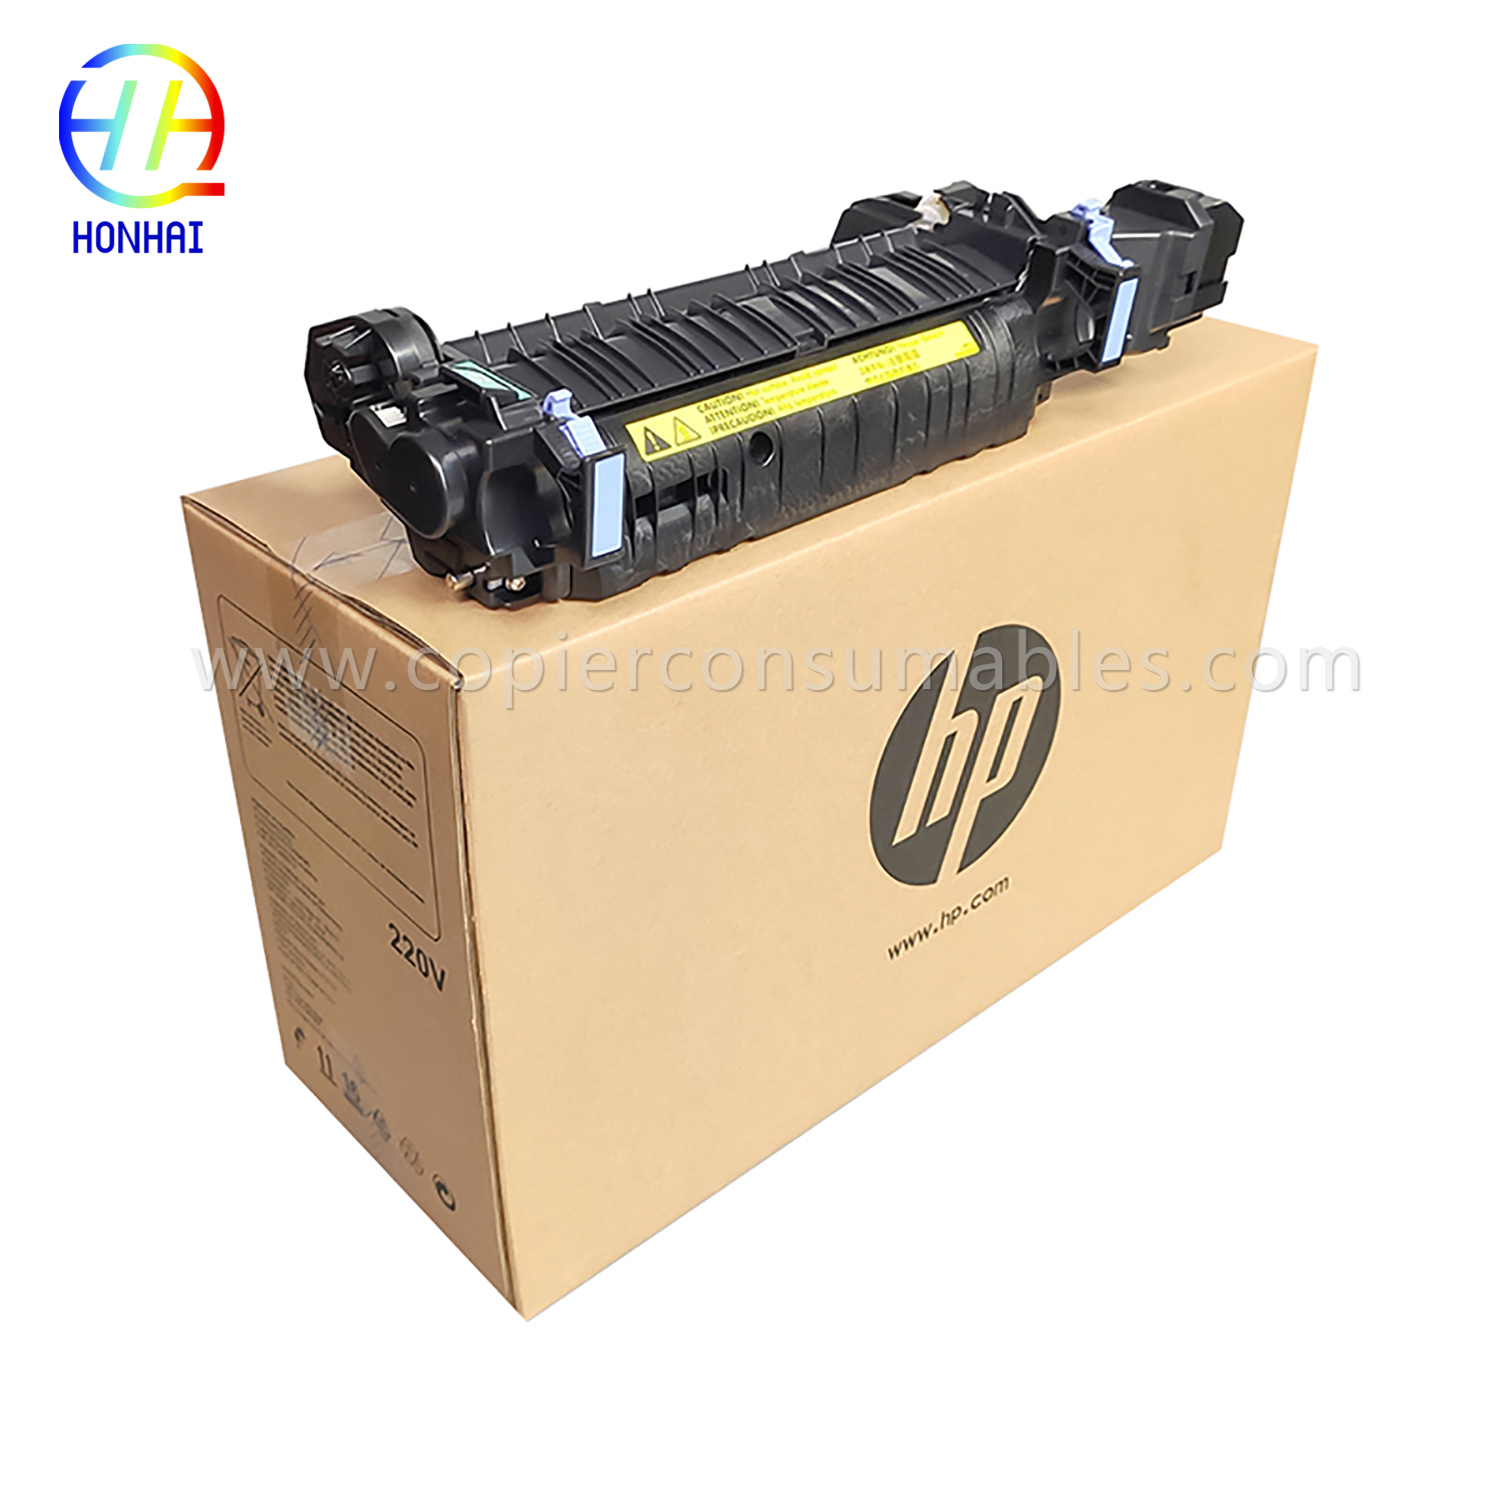 Kit Fuser kanggo HP Cp4025 (CE247A) 220V (1)